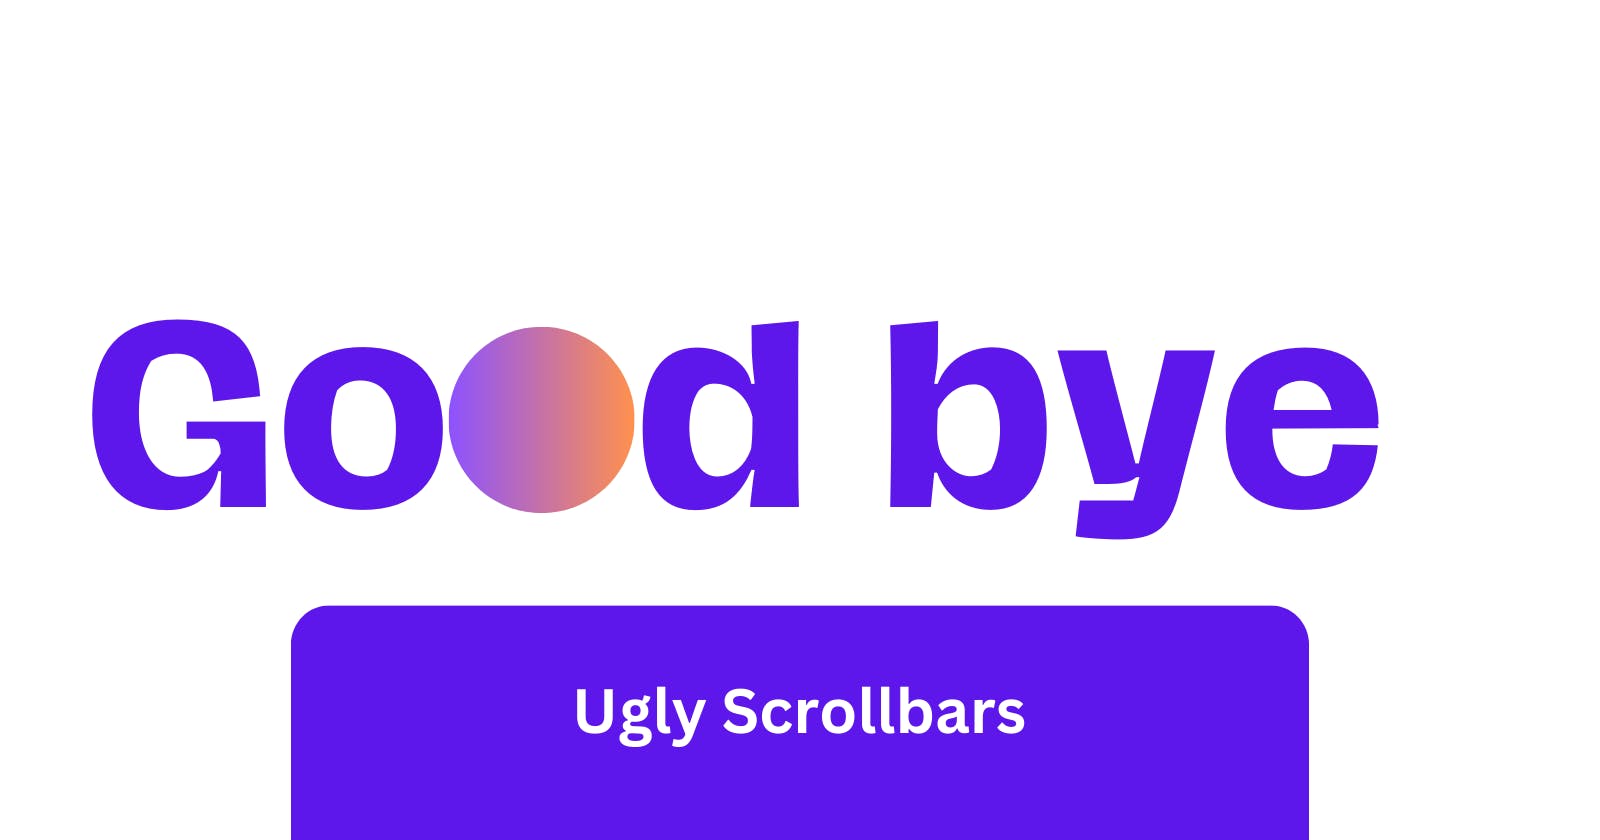 Goodbye Ugly Scrollbars